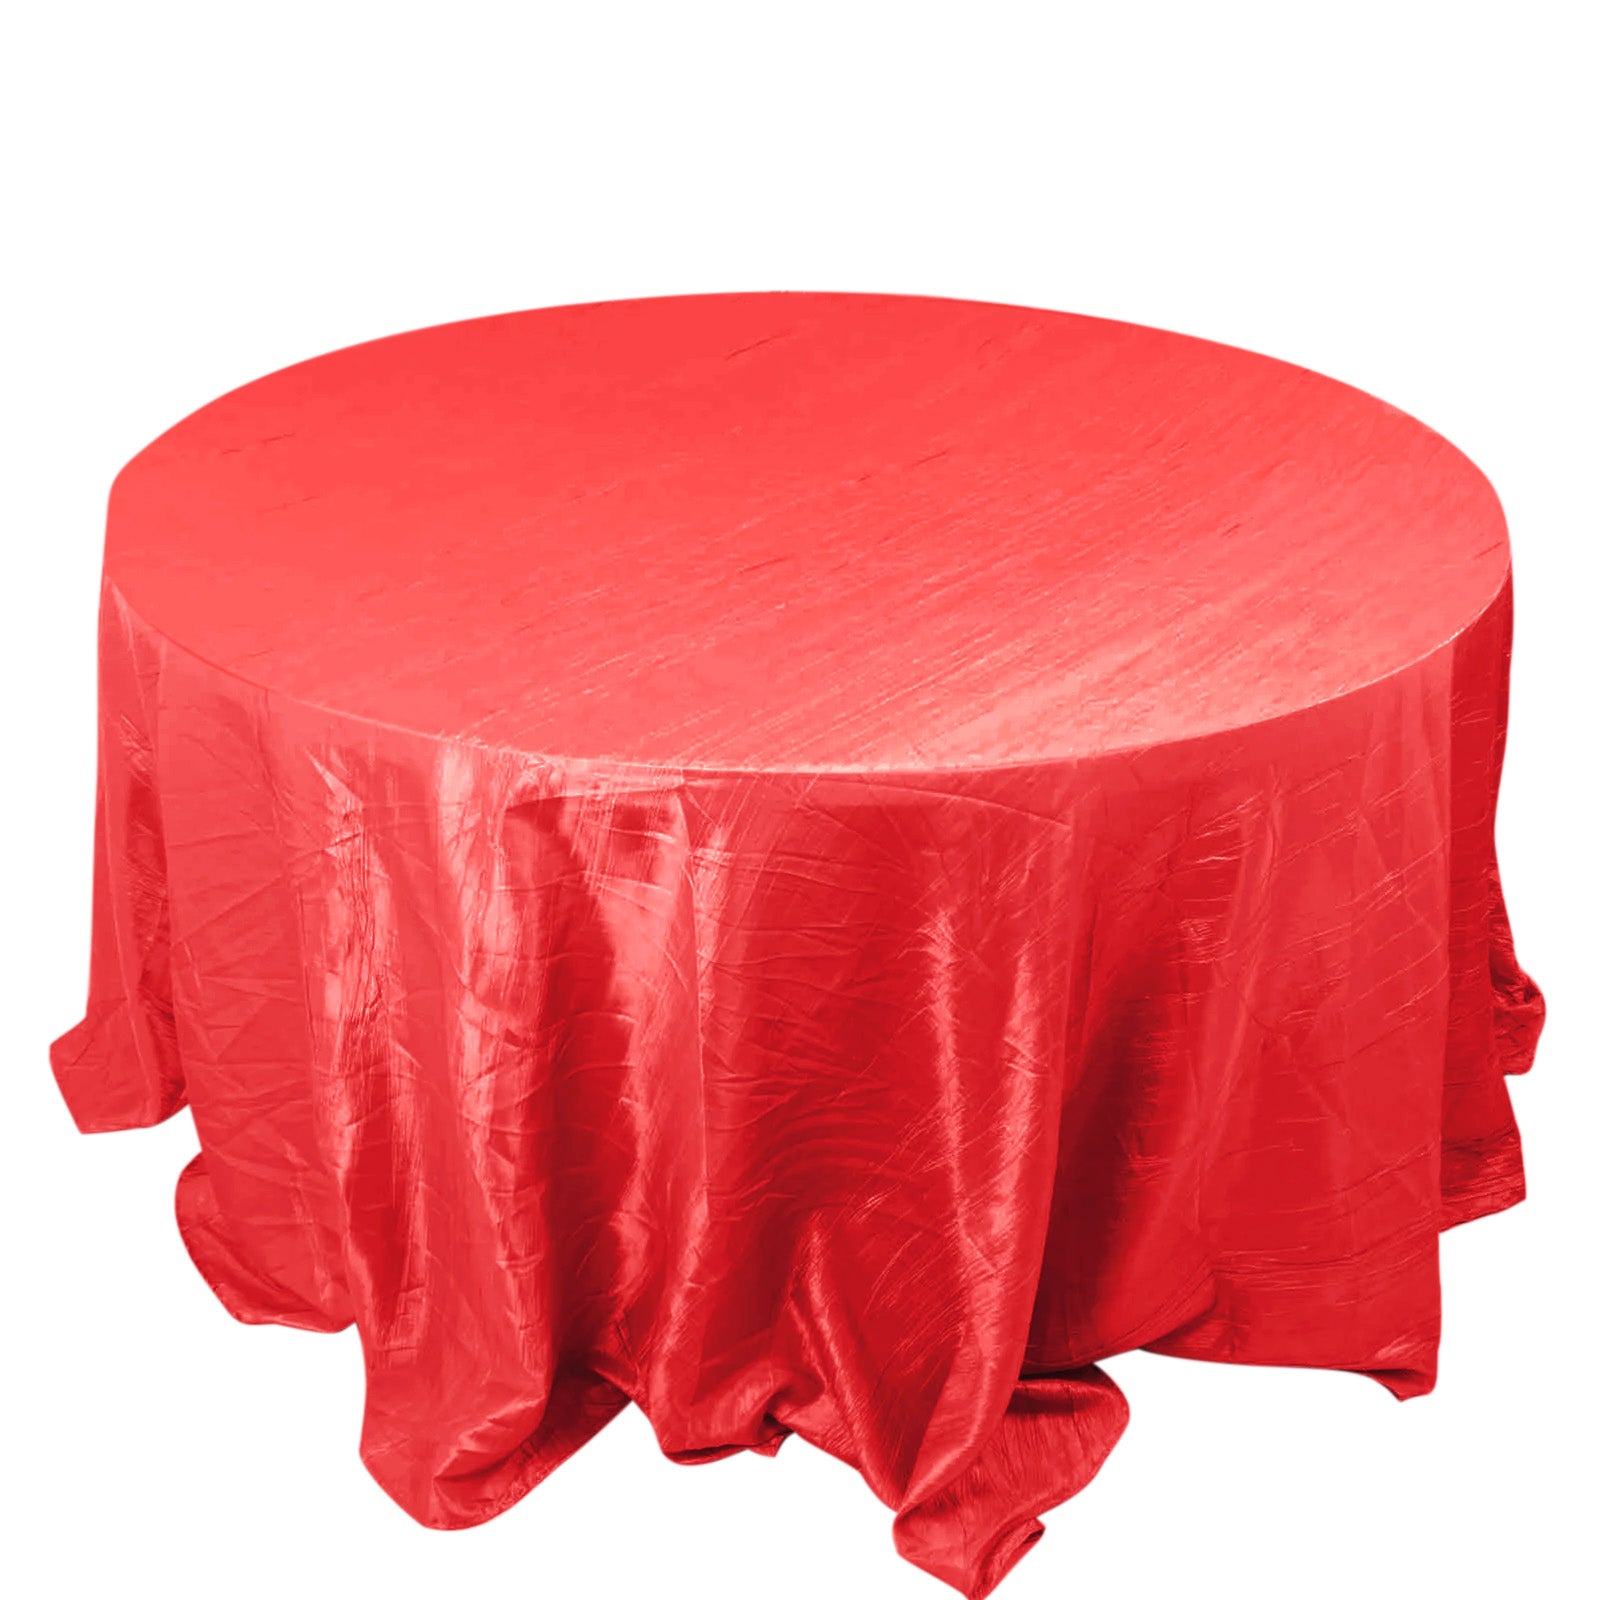 132 Red Accordion Crinkle Taffeta Tablecloth